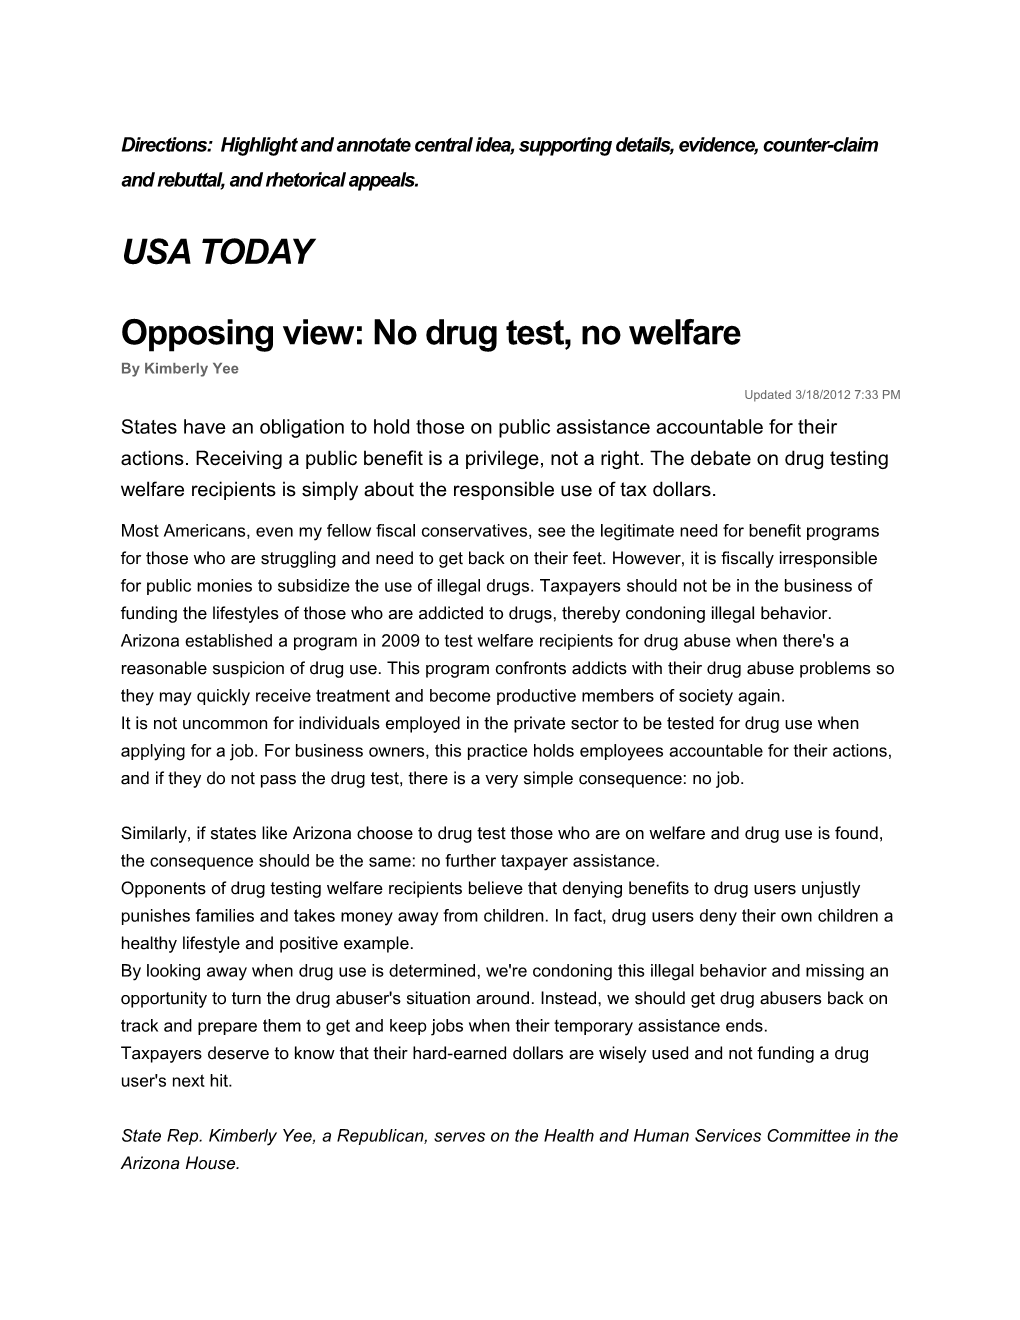 Opposing View: No Drug Test, No Welfare